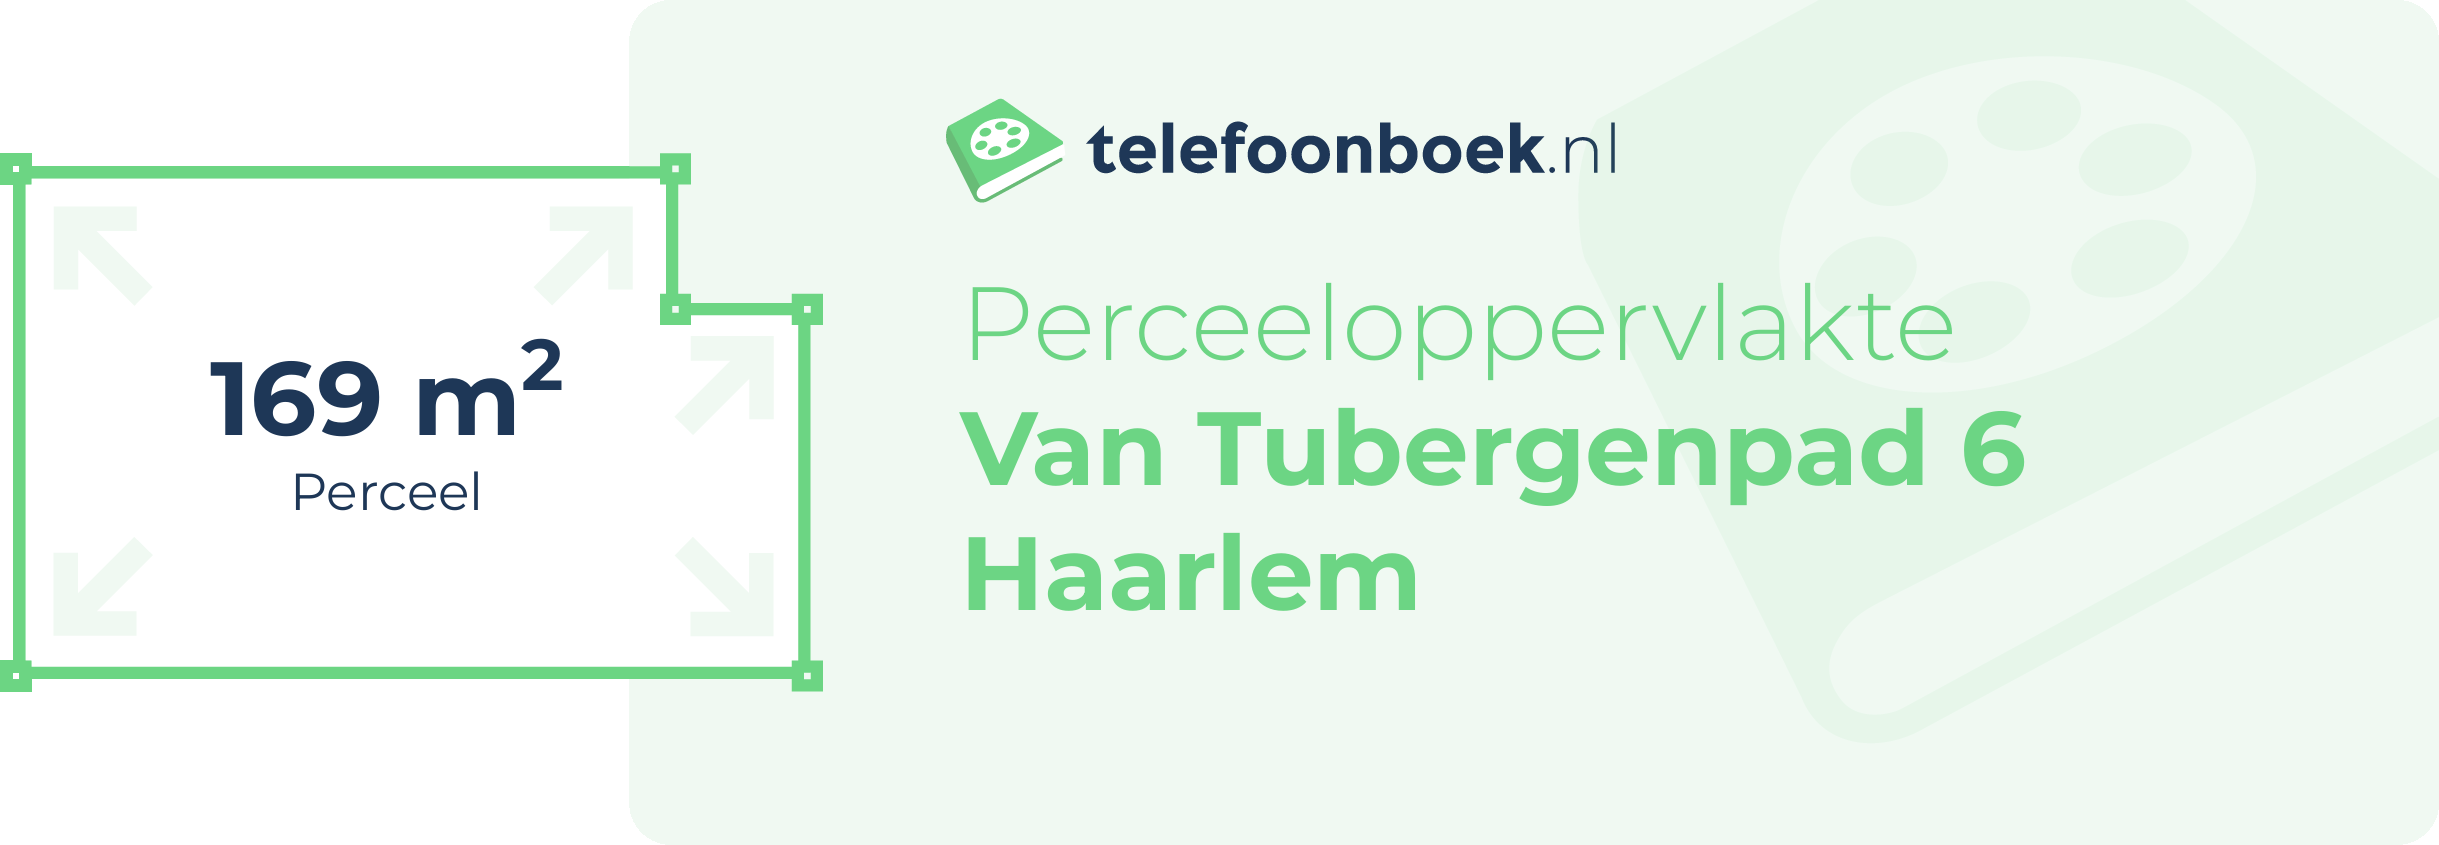 Perceeloppervlakte Van Tubergenpad 6 Haarlem